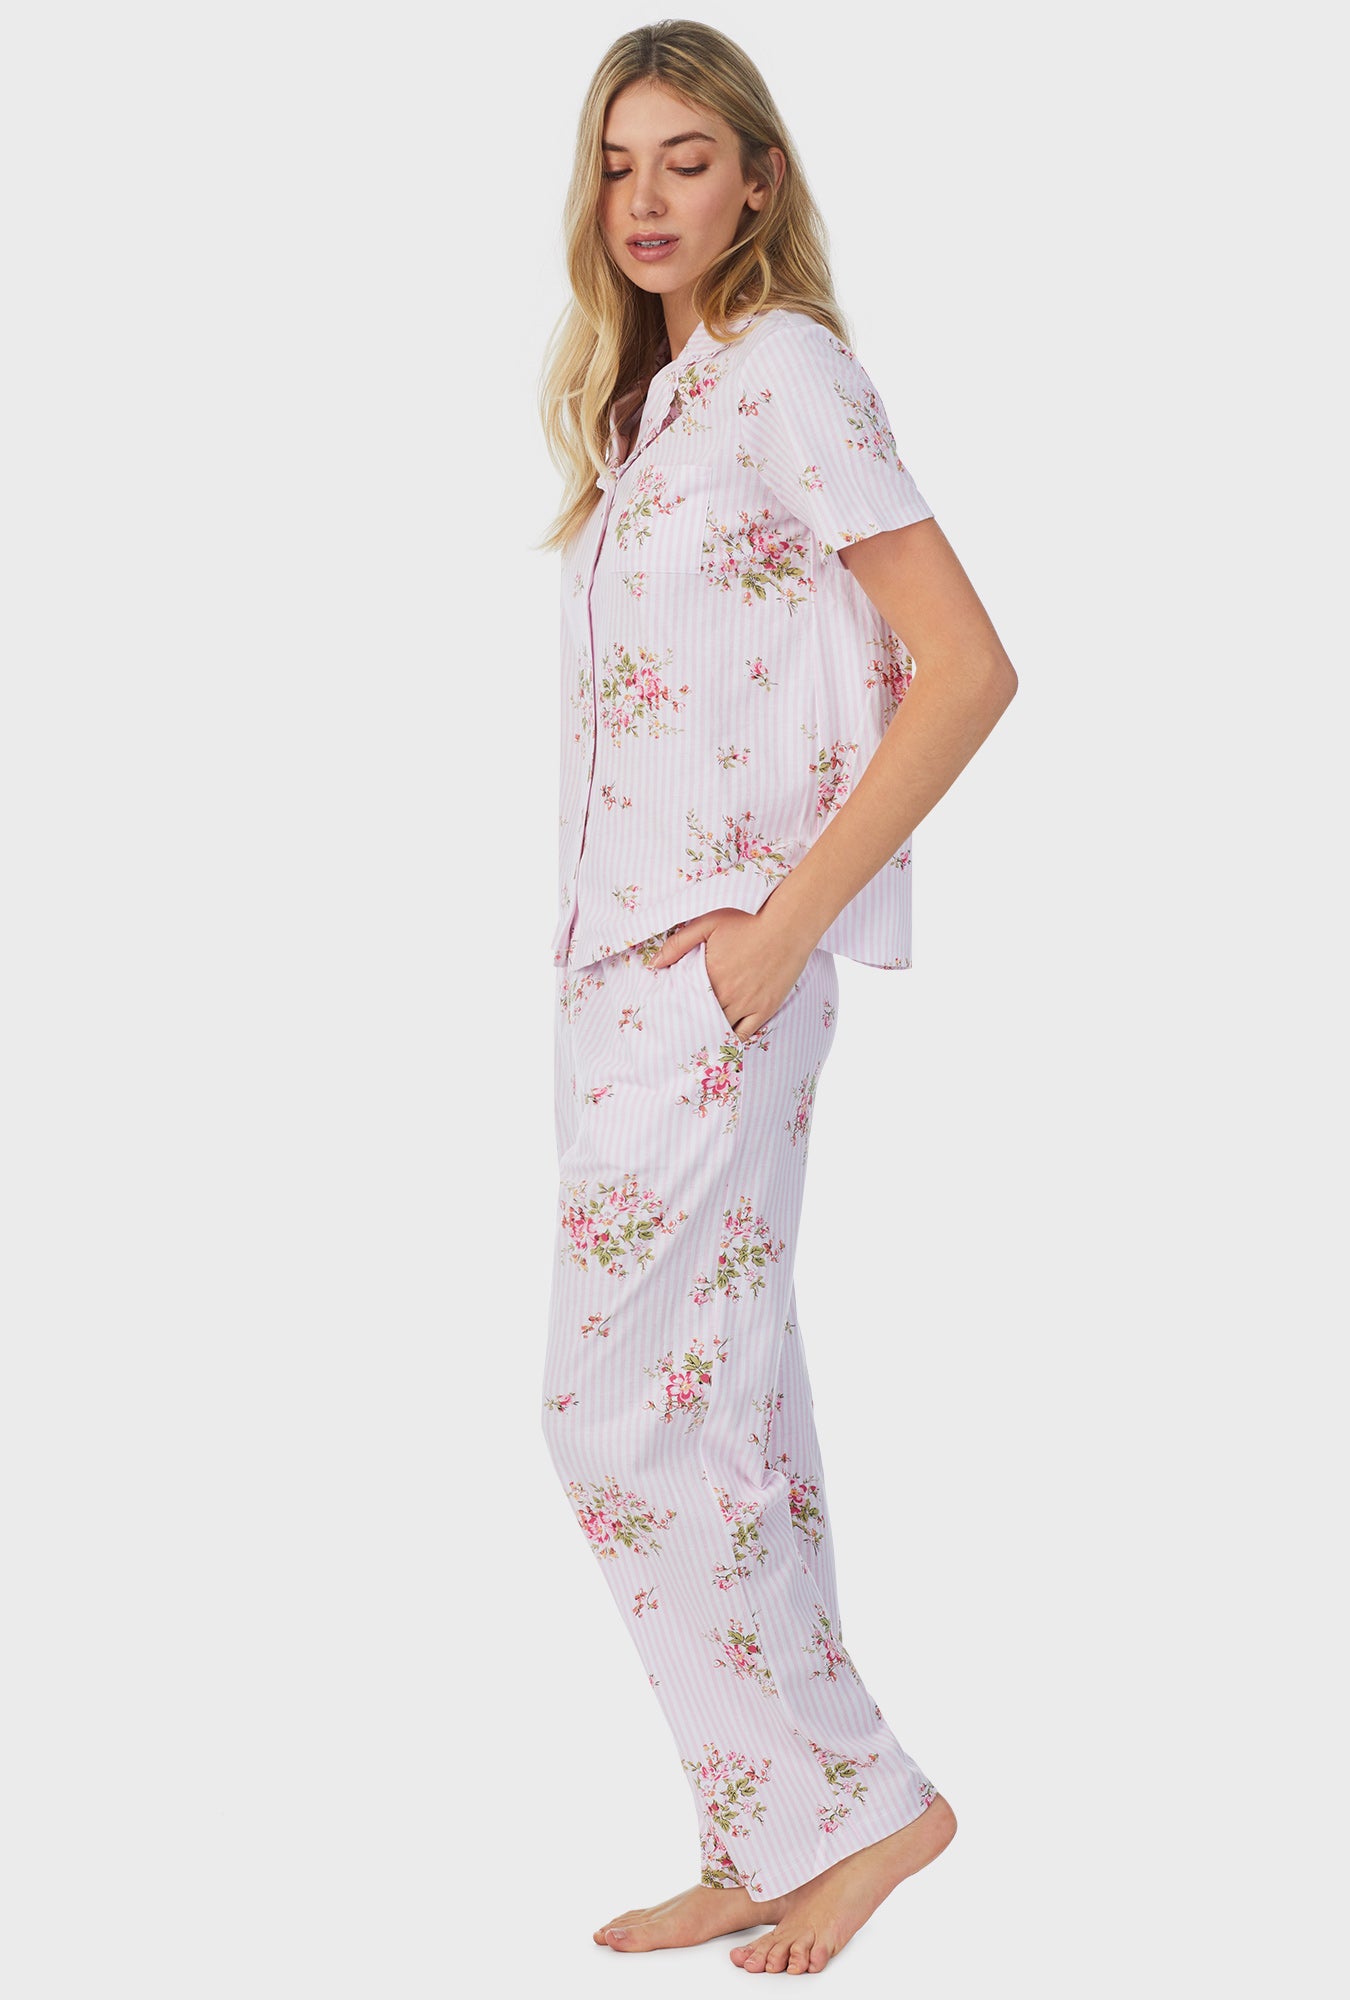 A lady wearing pink short sleeve long petite pajama set with fleur print